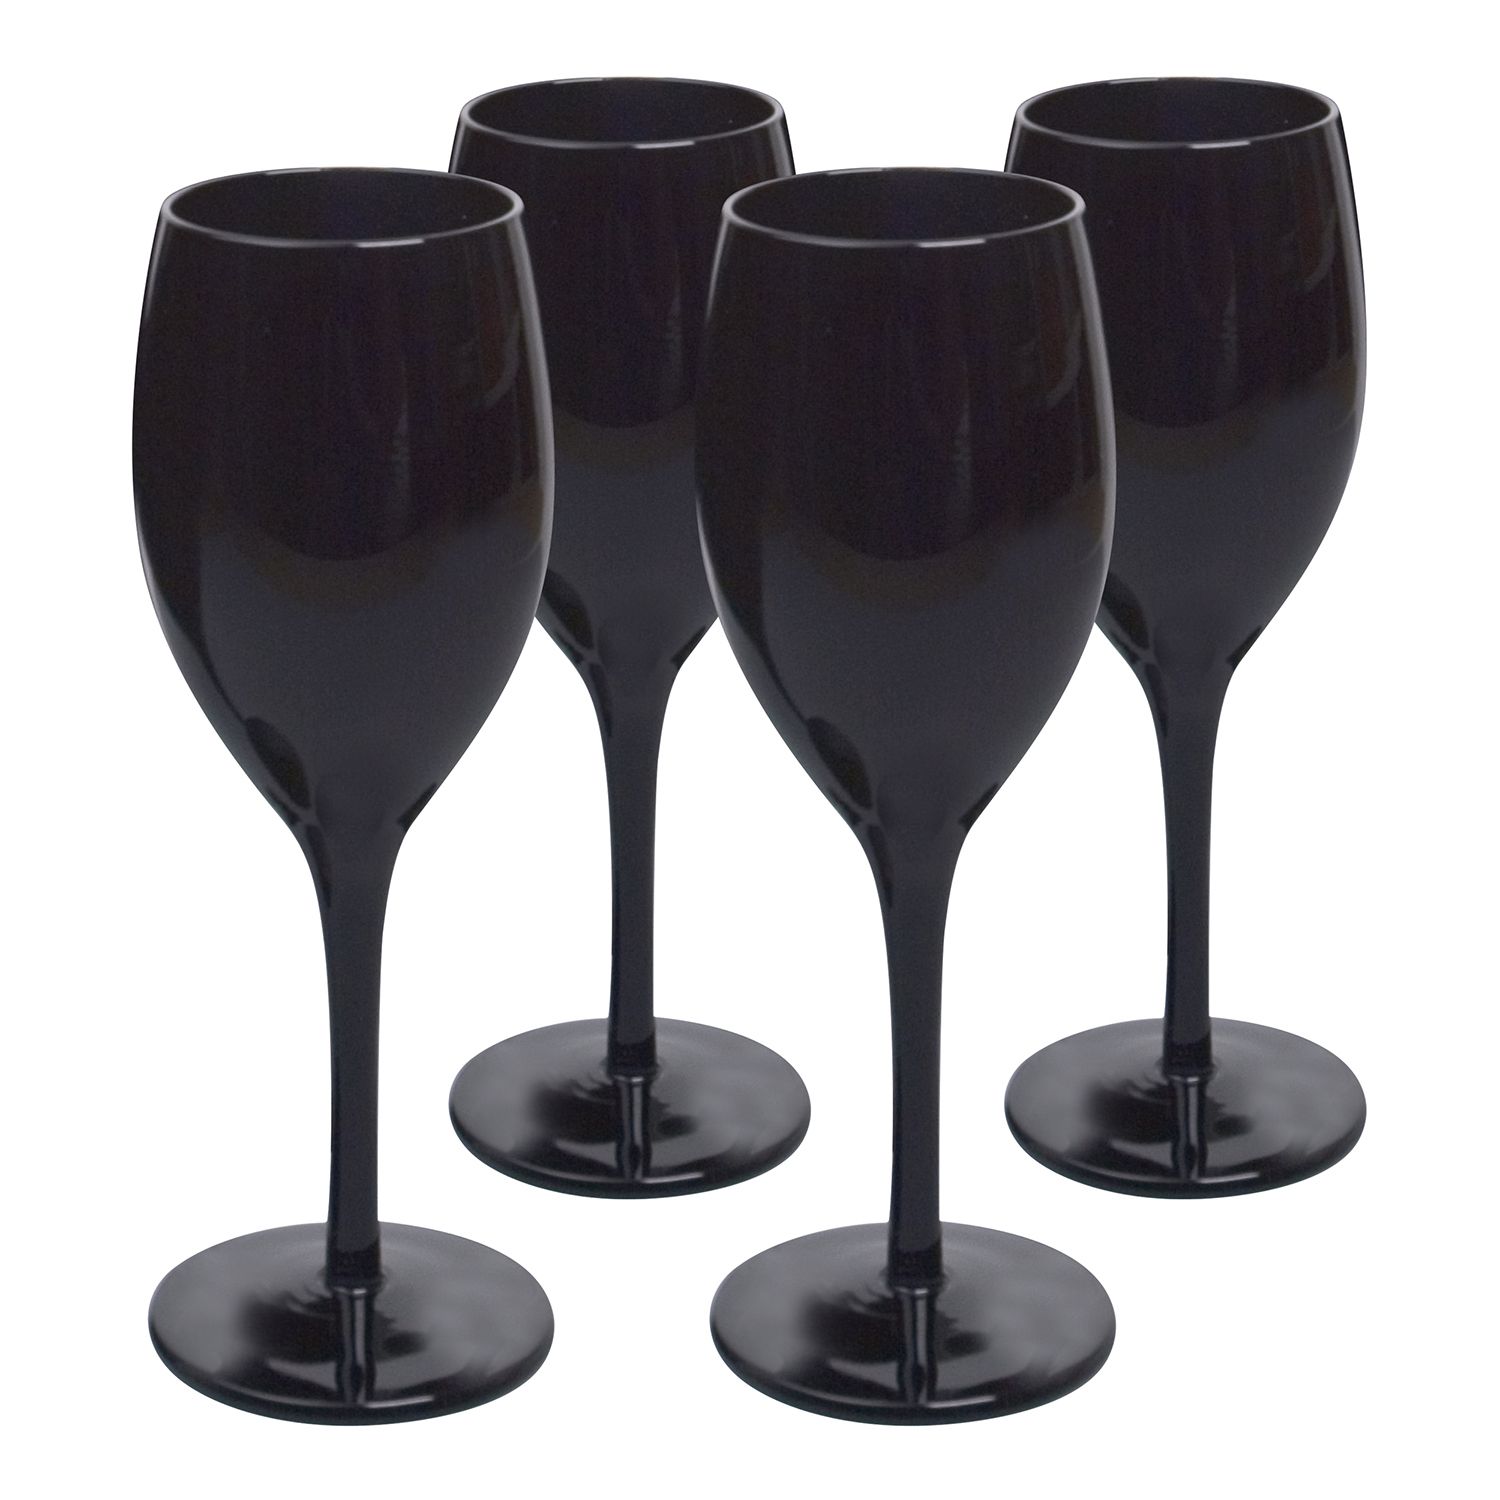 Berkware Luxurious And Elegant Sparkling Smoke Colored Wine Glass